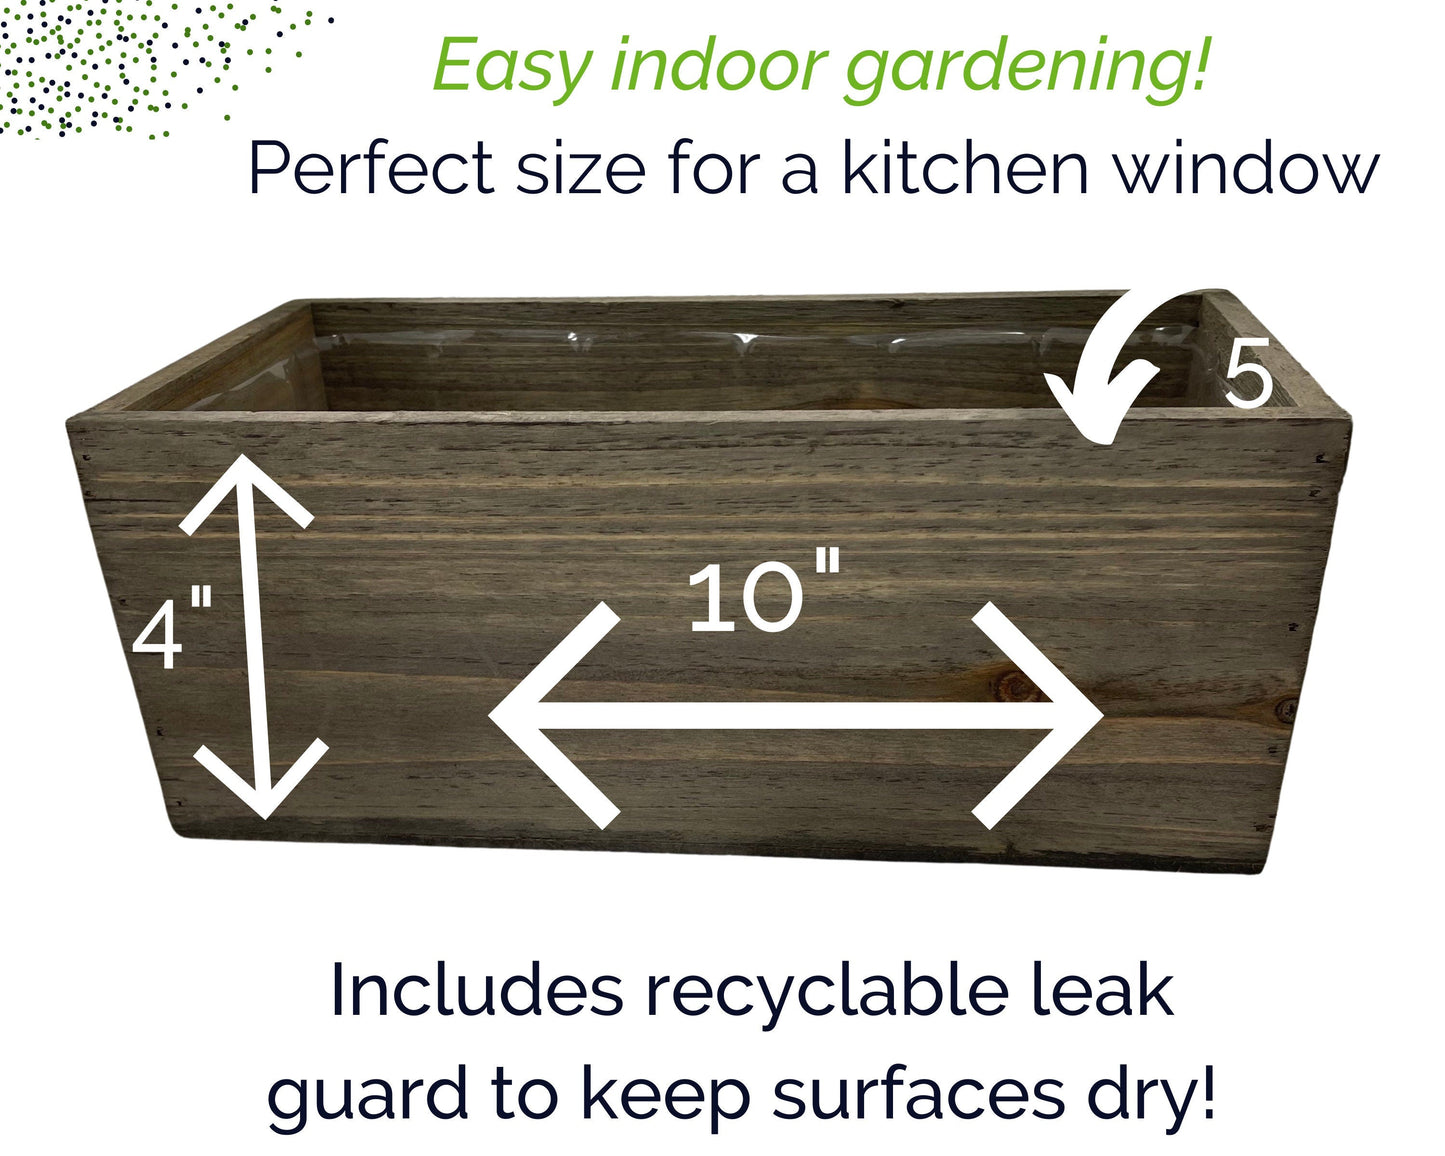 Organic Arugula Indoor Garden Kit - Corporate Gift